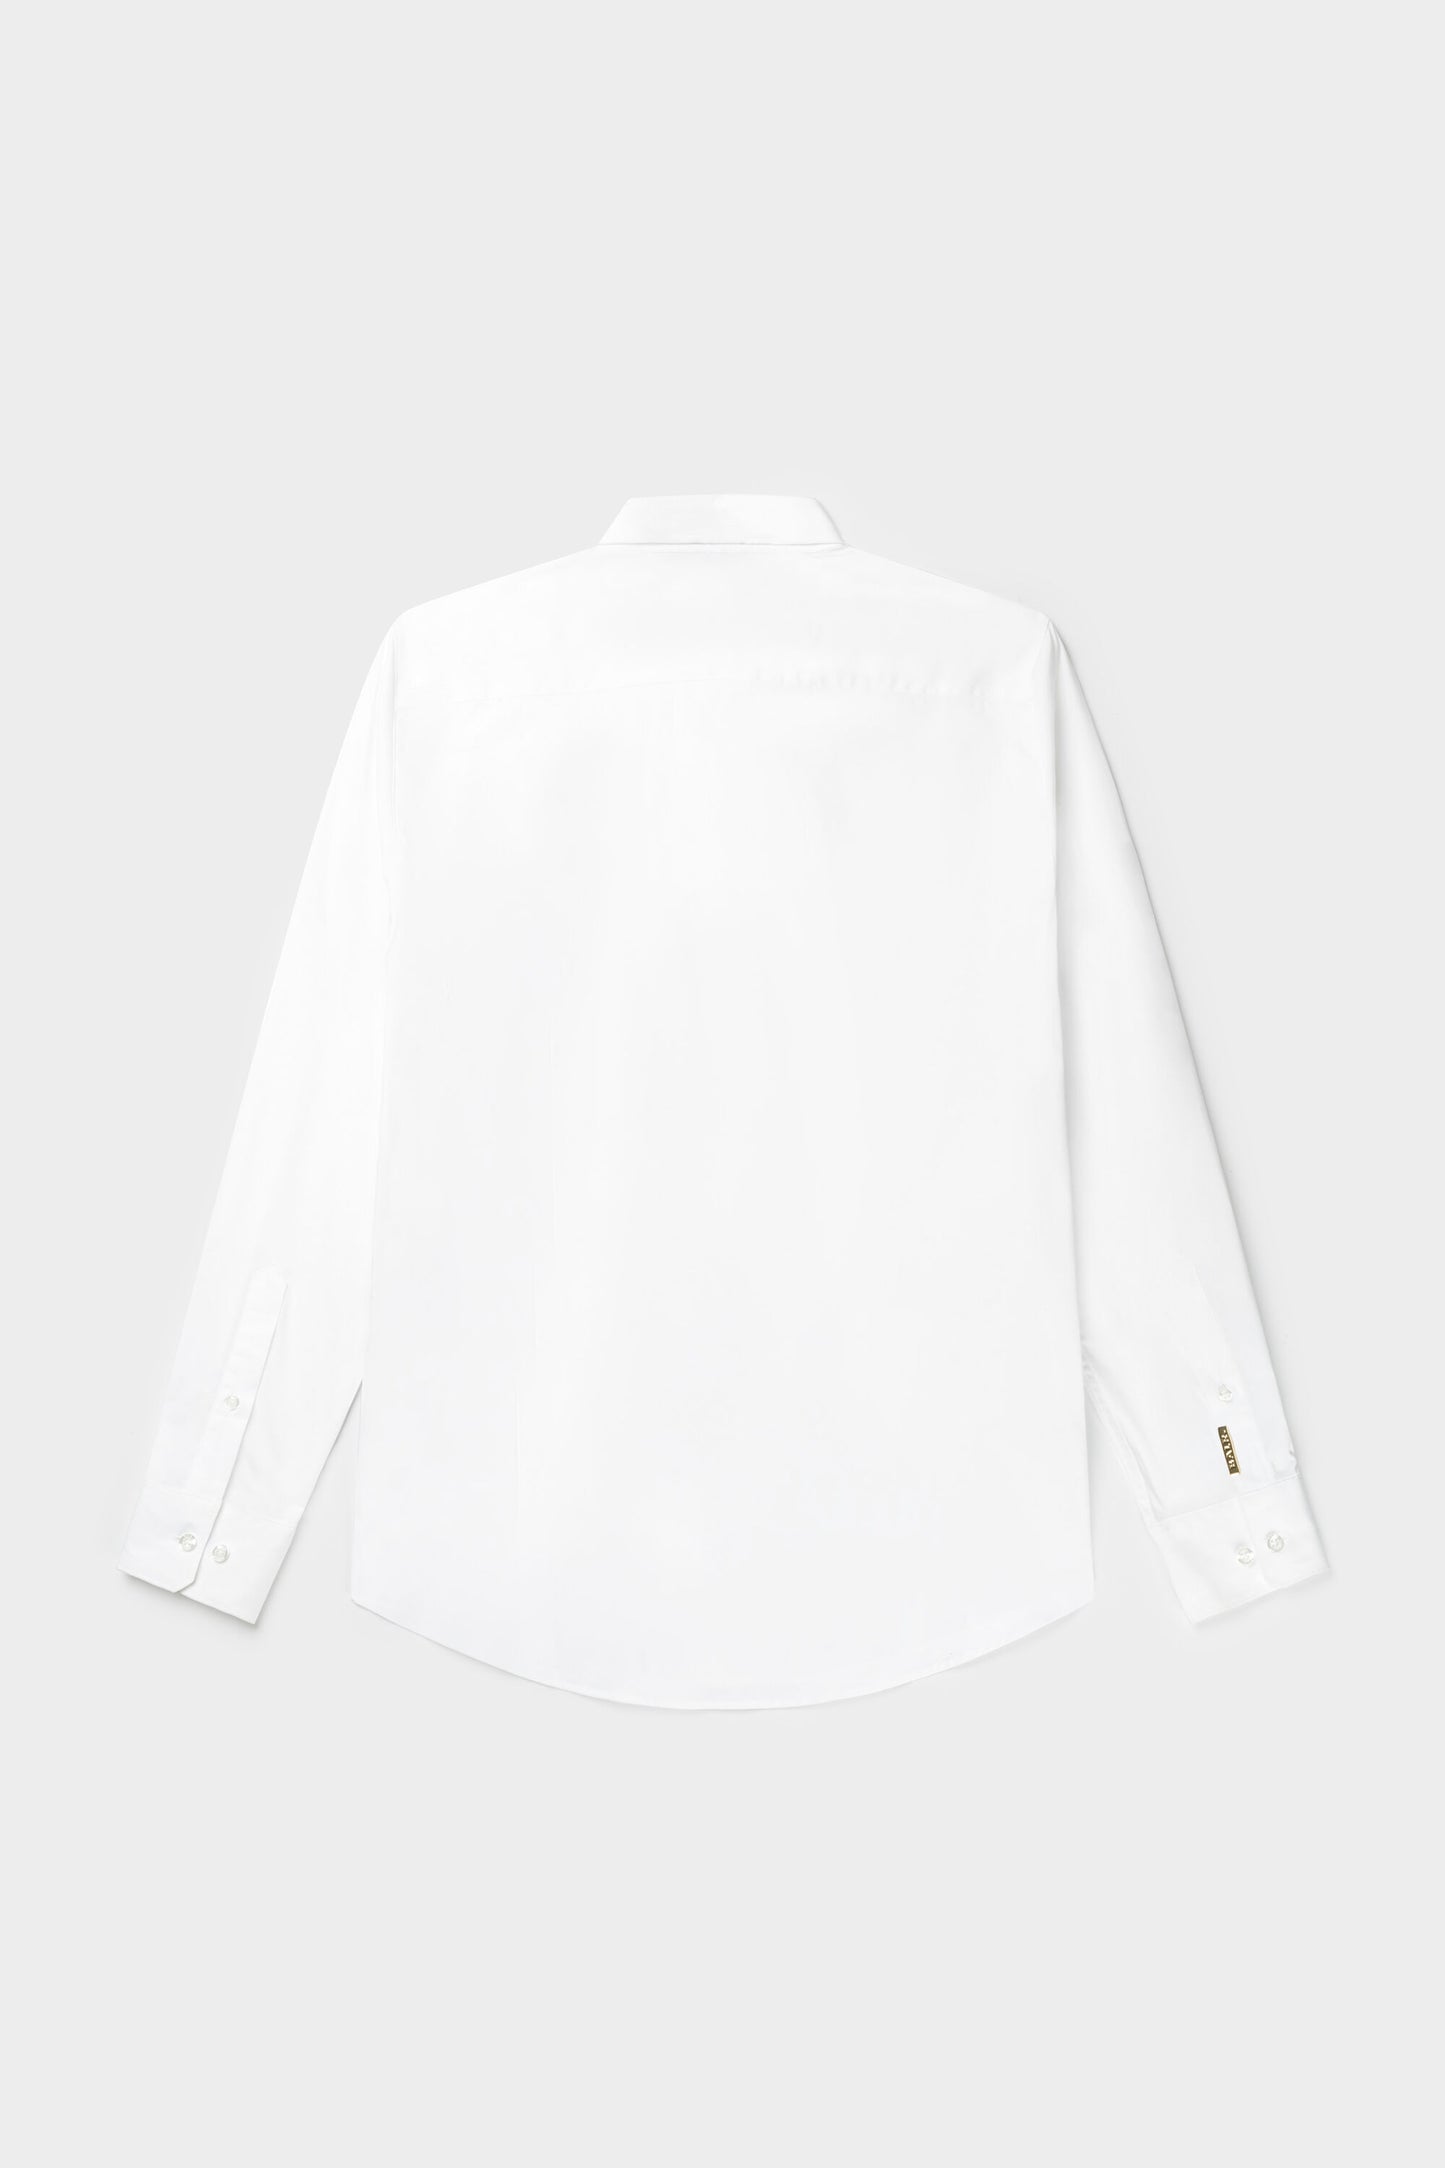 Phillipe Slim Emblem Shirt Bright White